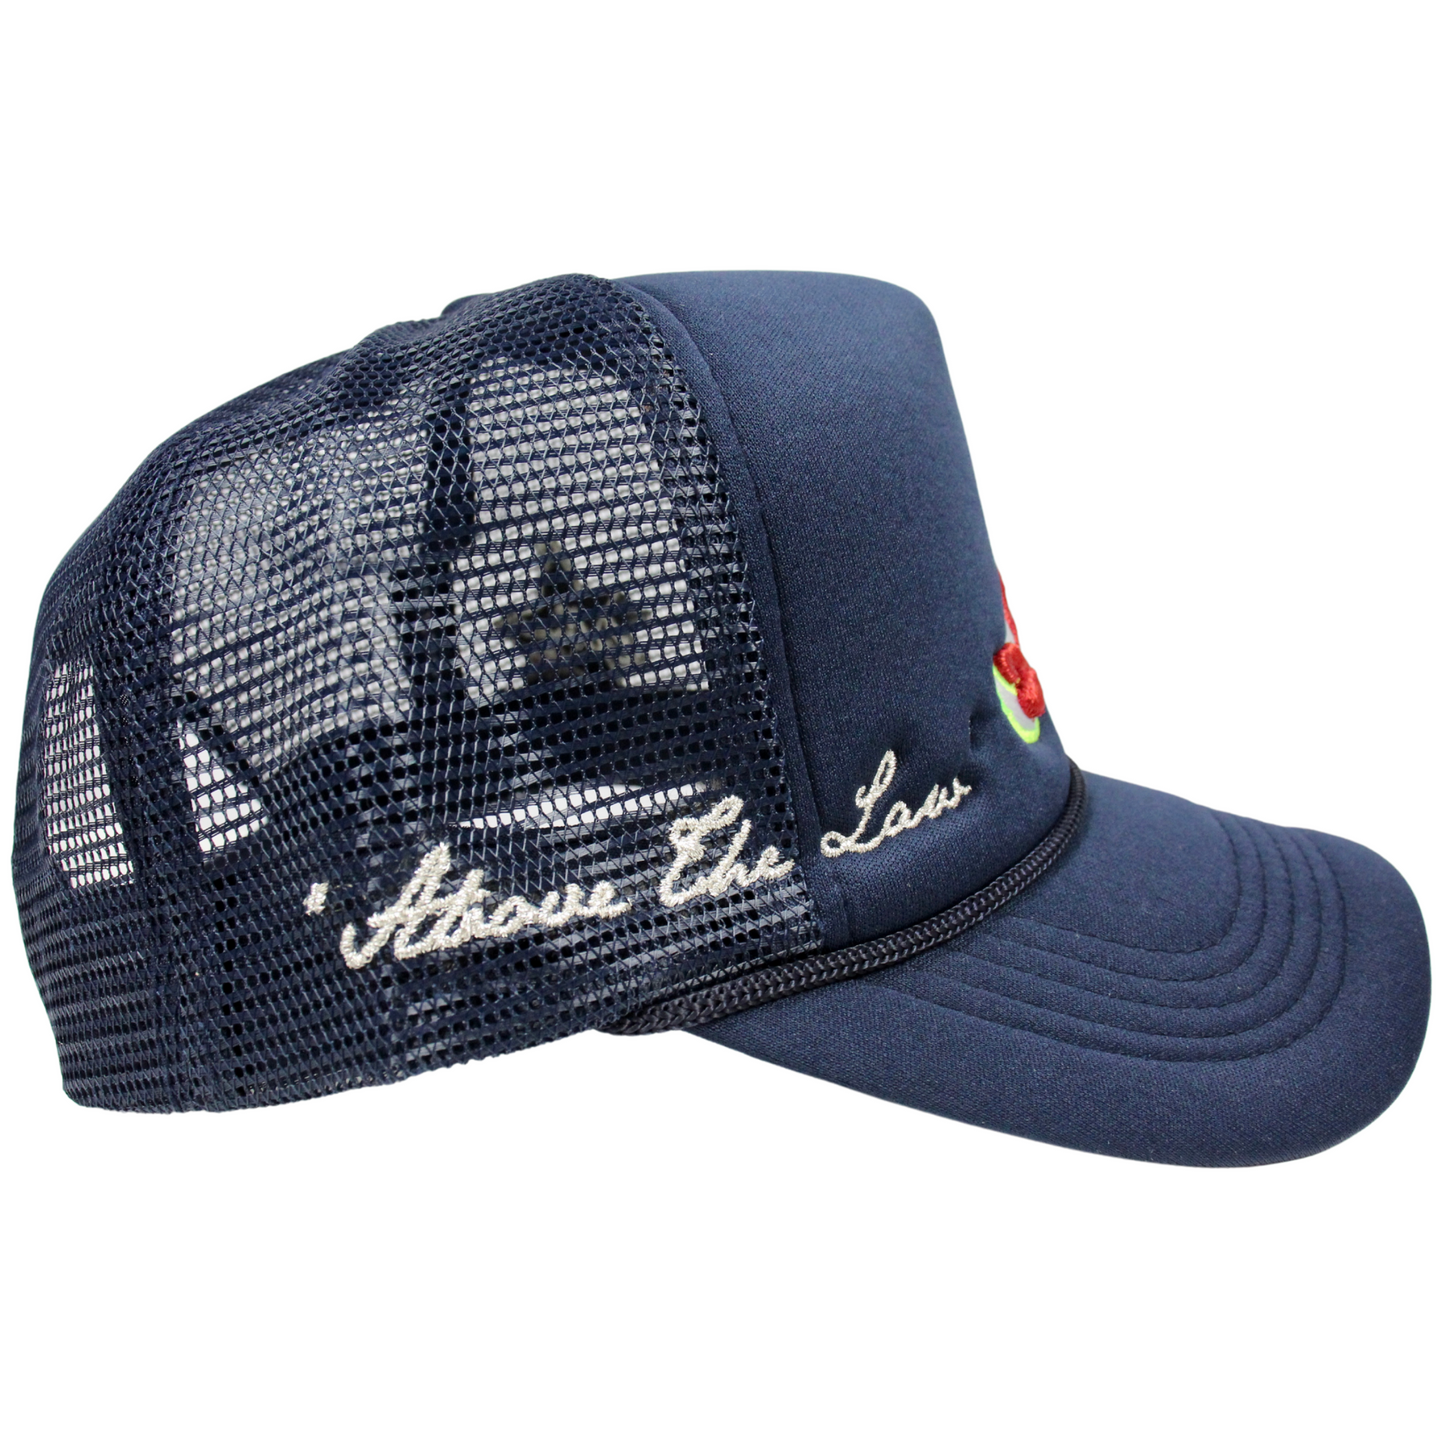 La Ropa Atlanta Trucker Hat (Navy)